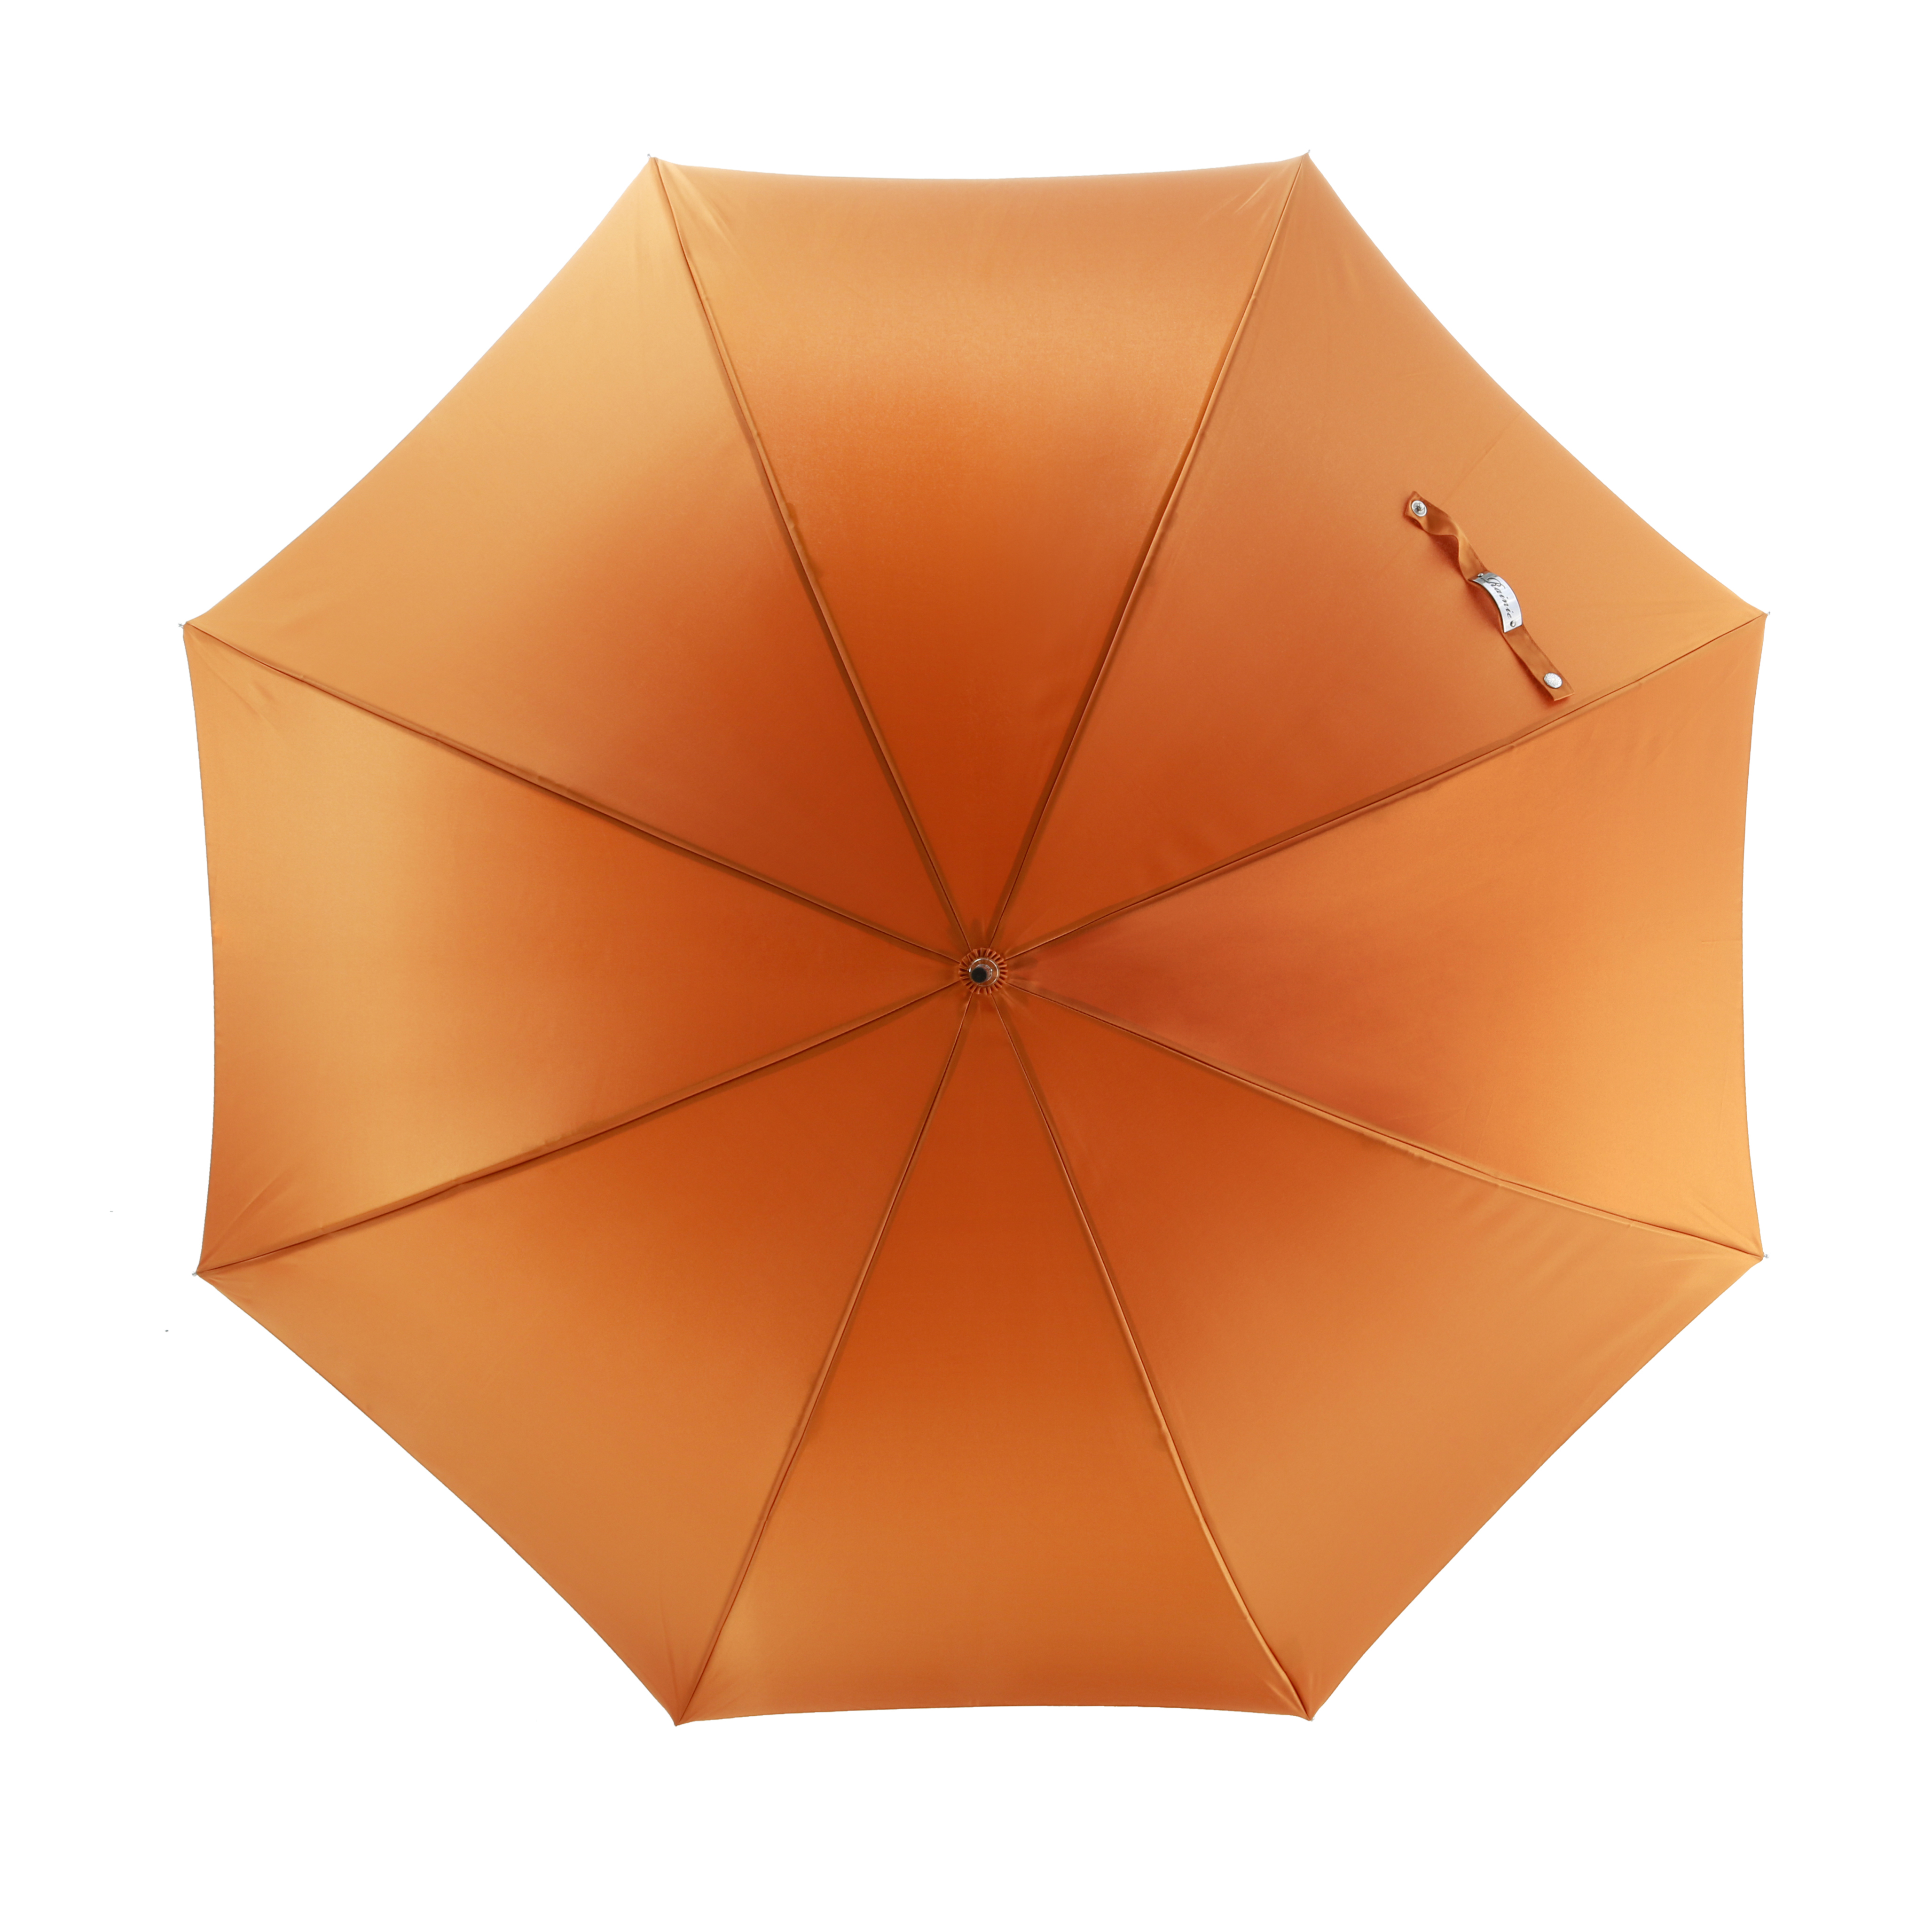 The seahorse umbrella